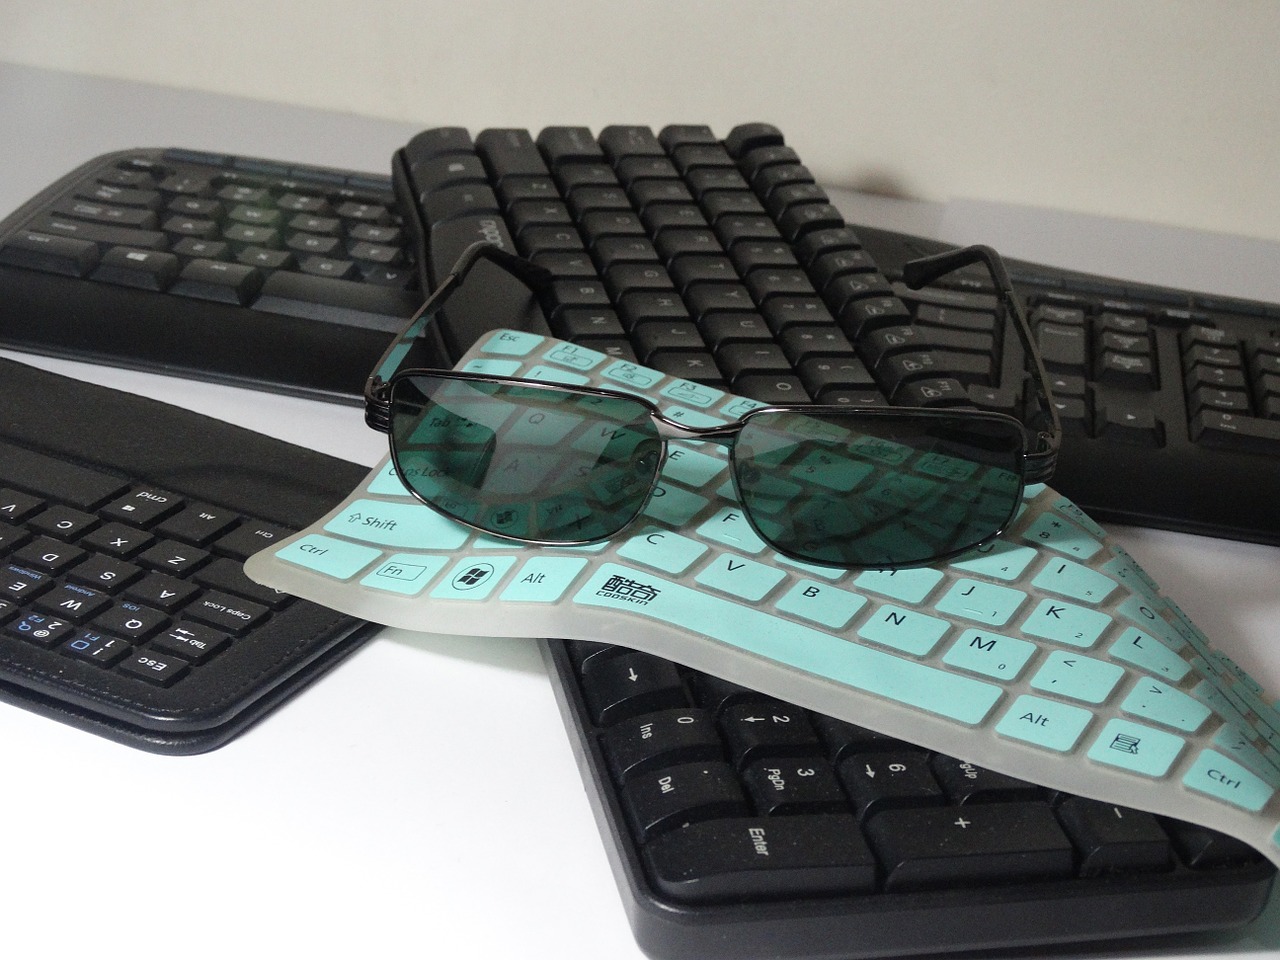 cool keyboard skins free photo